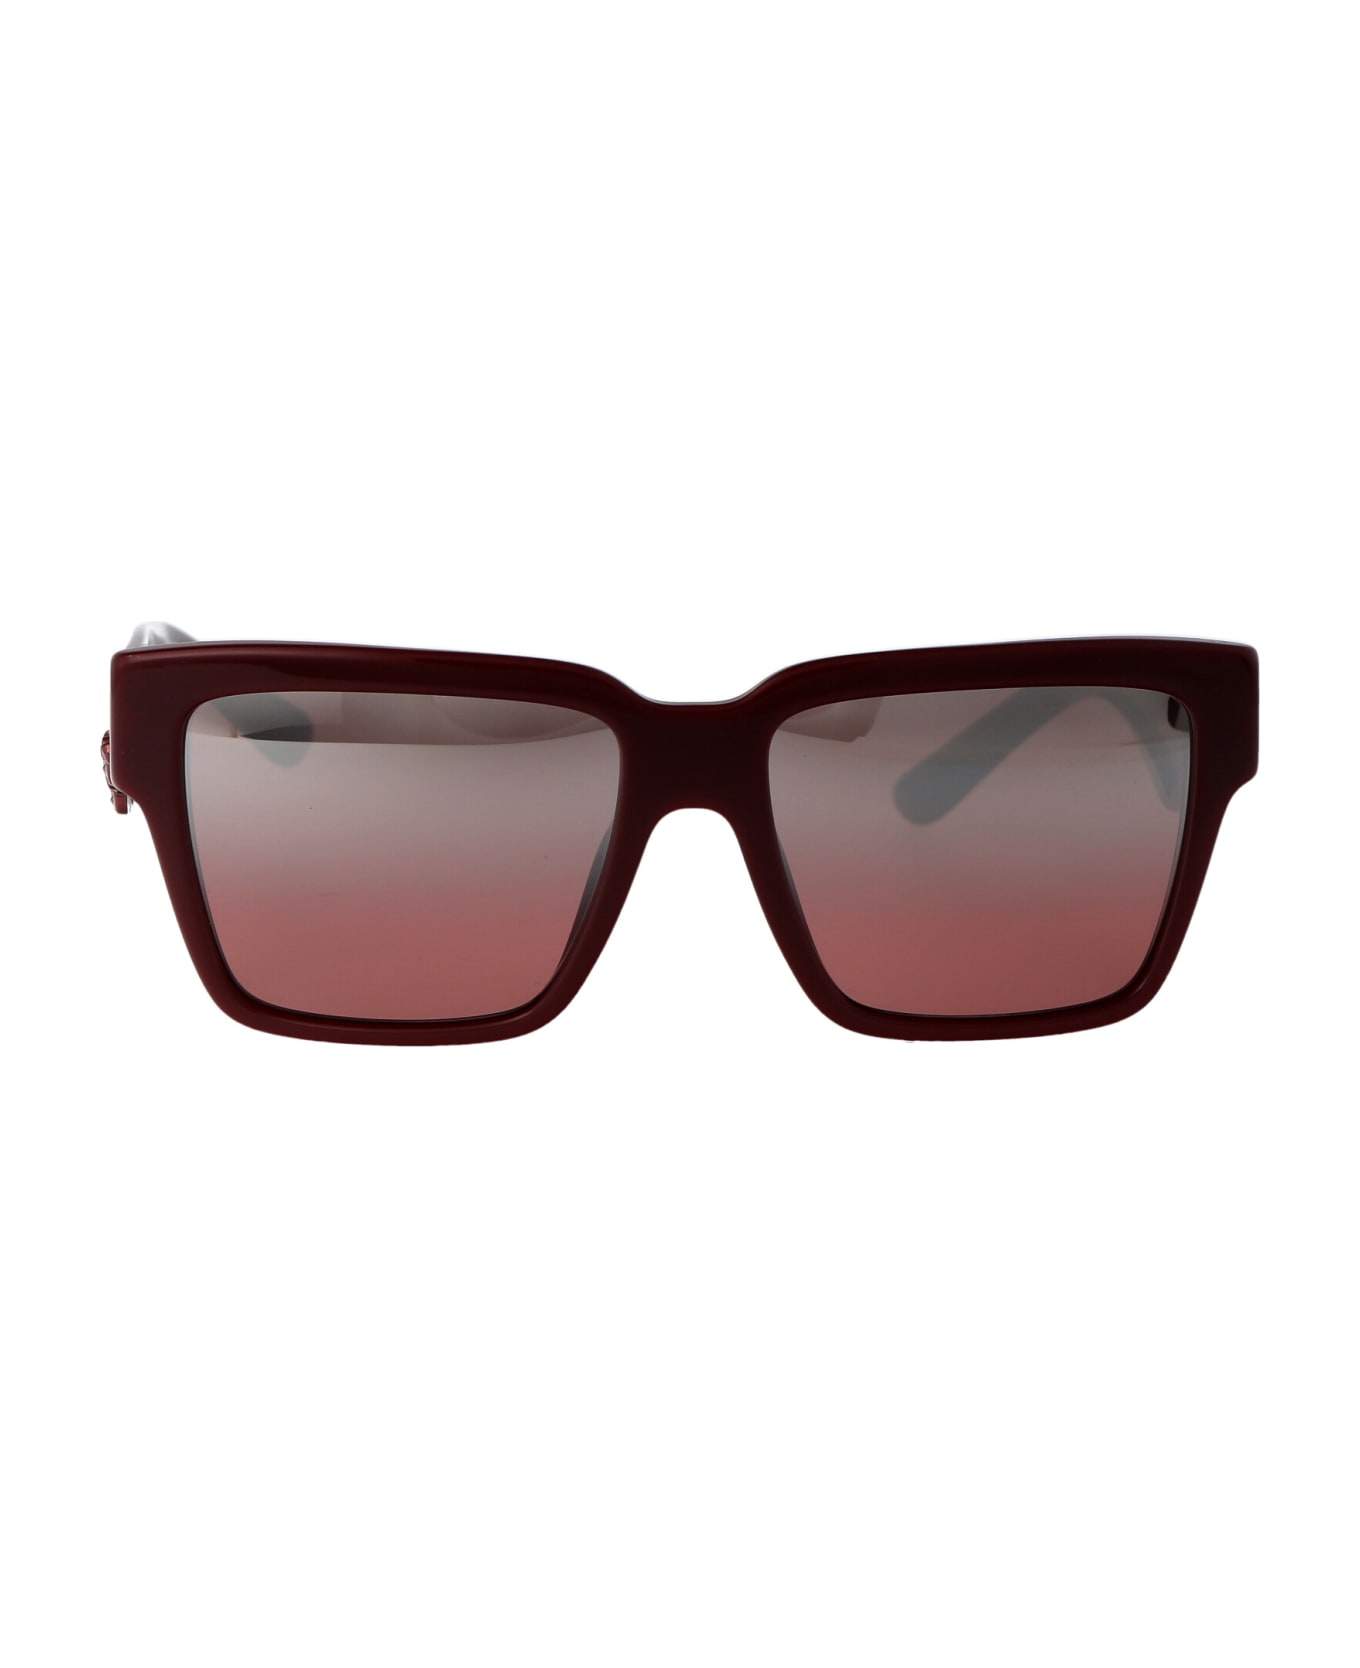 Duple tinted sunglasses Eyewear 0dg4436 Sunglasses - 30917E Bordeuax